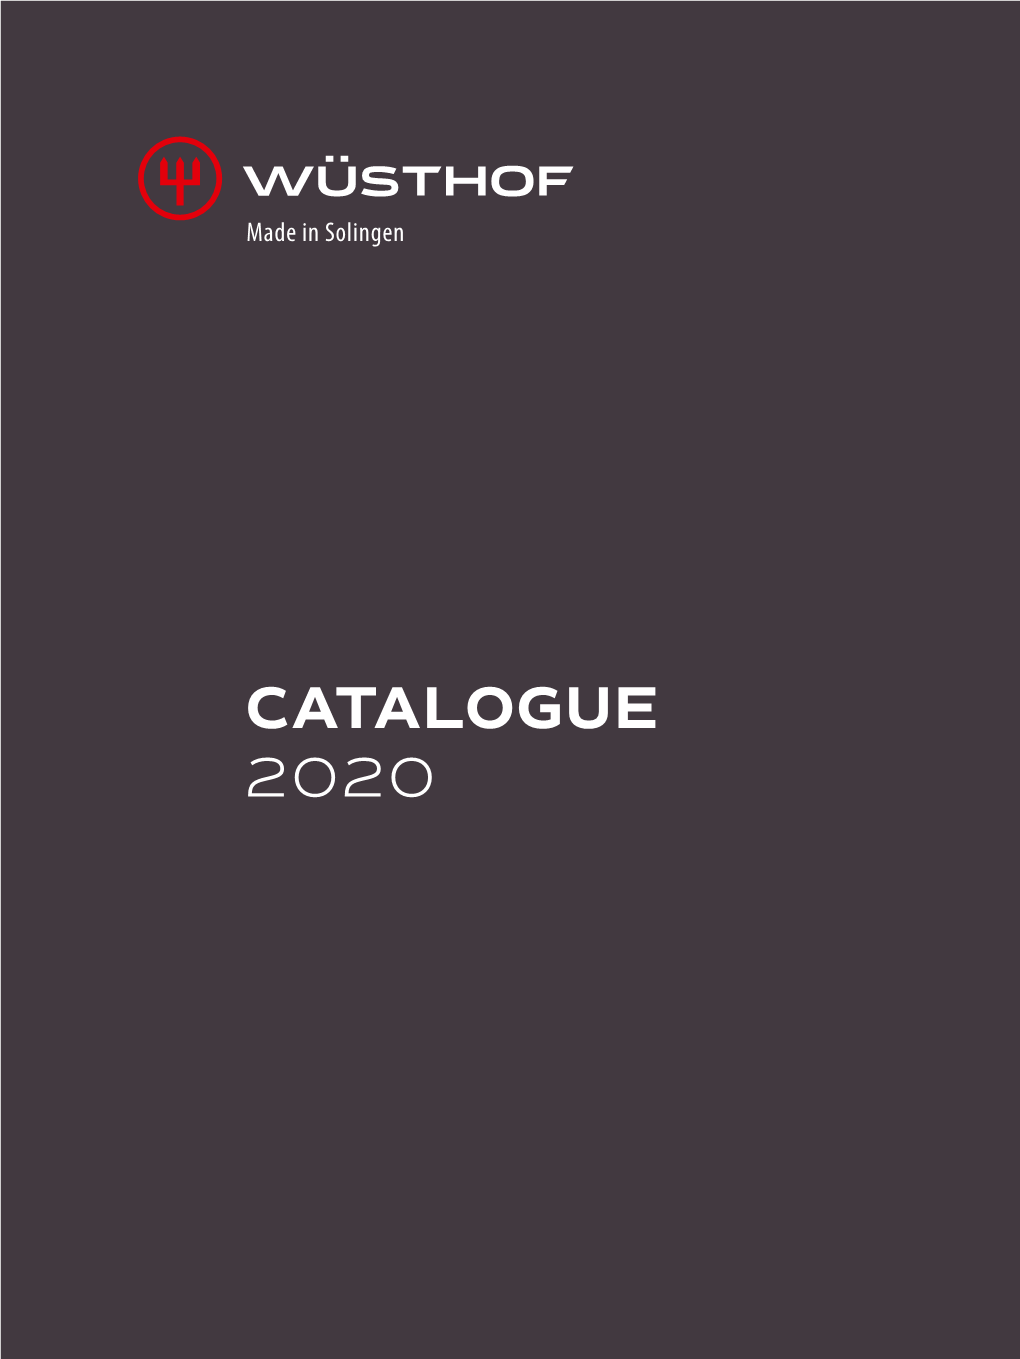 CATALOGUE 2020 Content